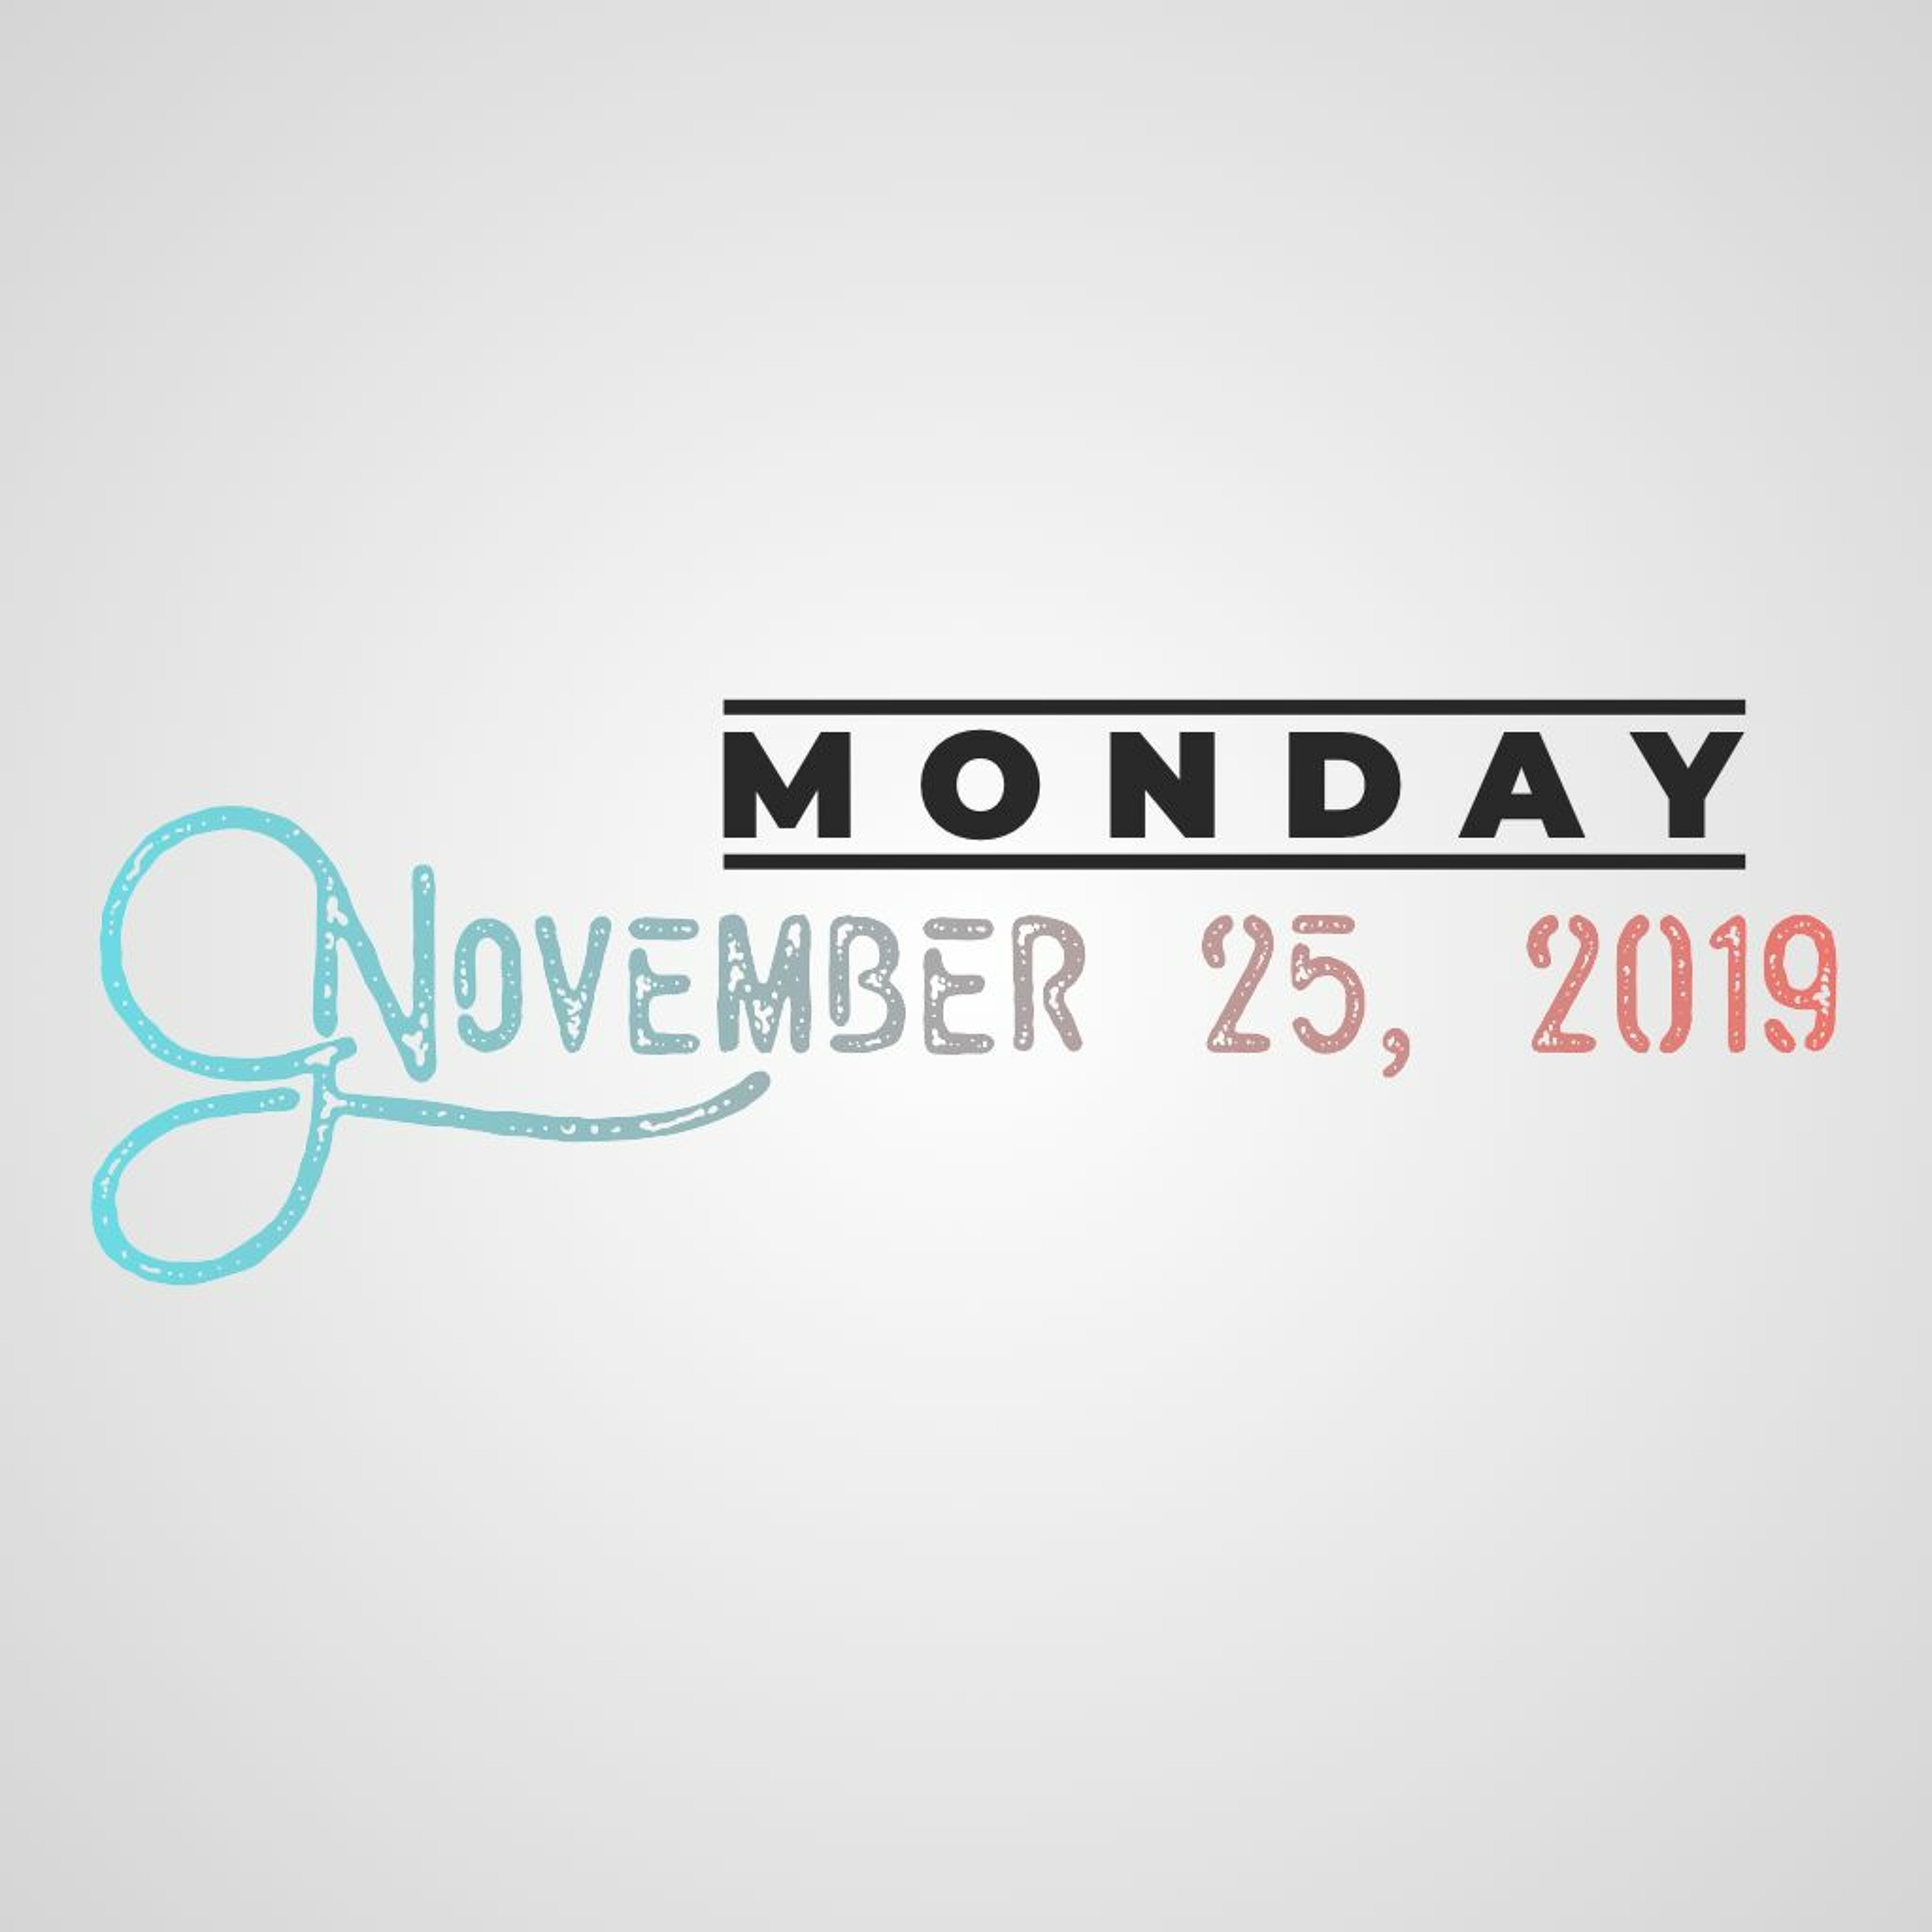 Monday, November 25, 2019